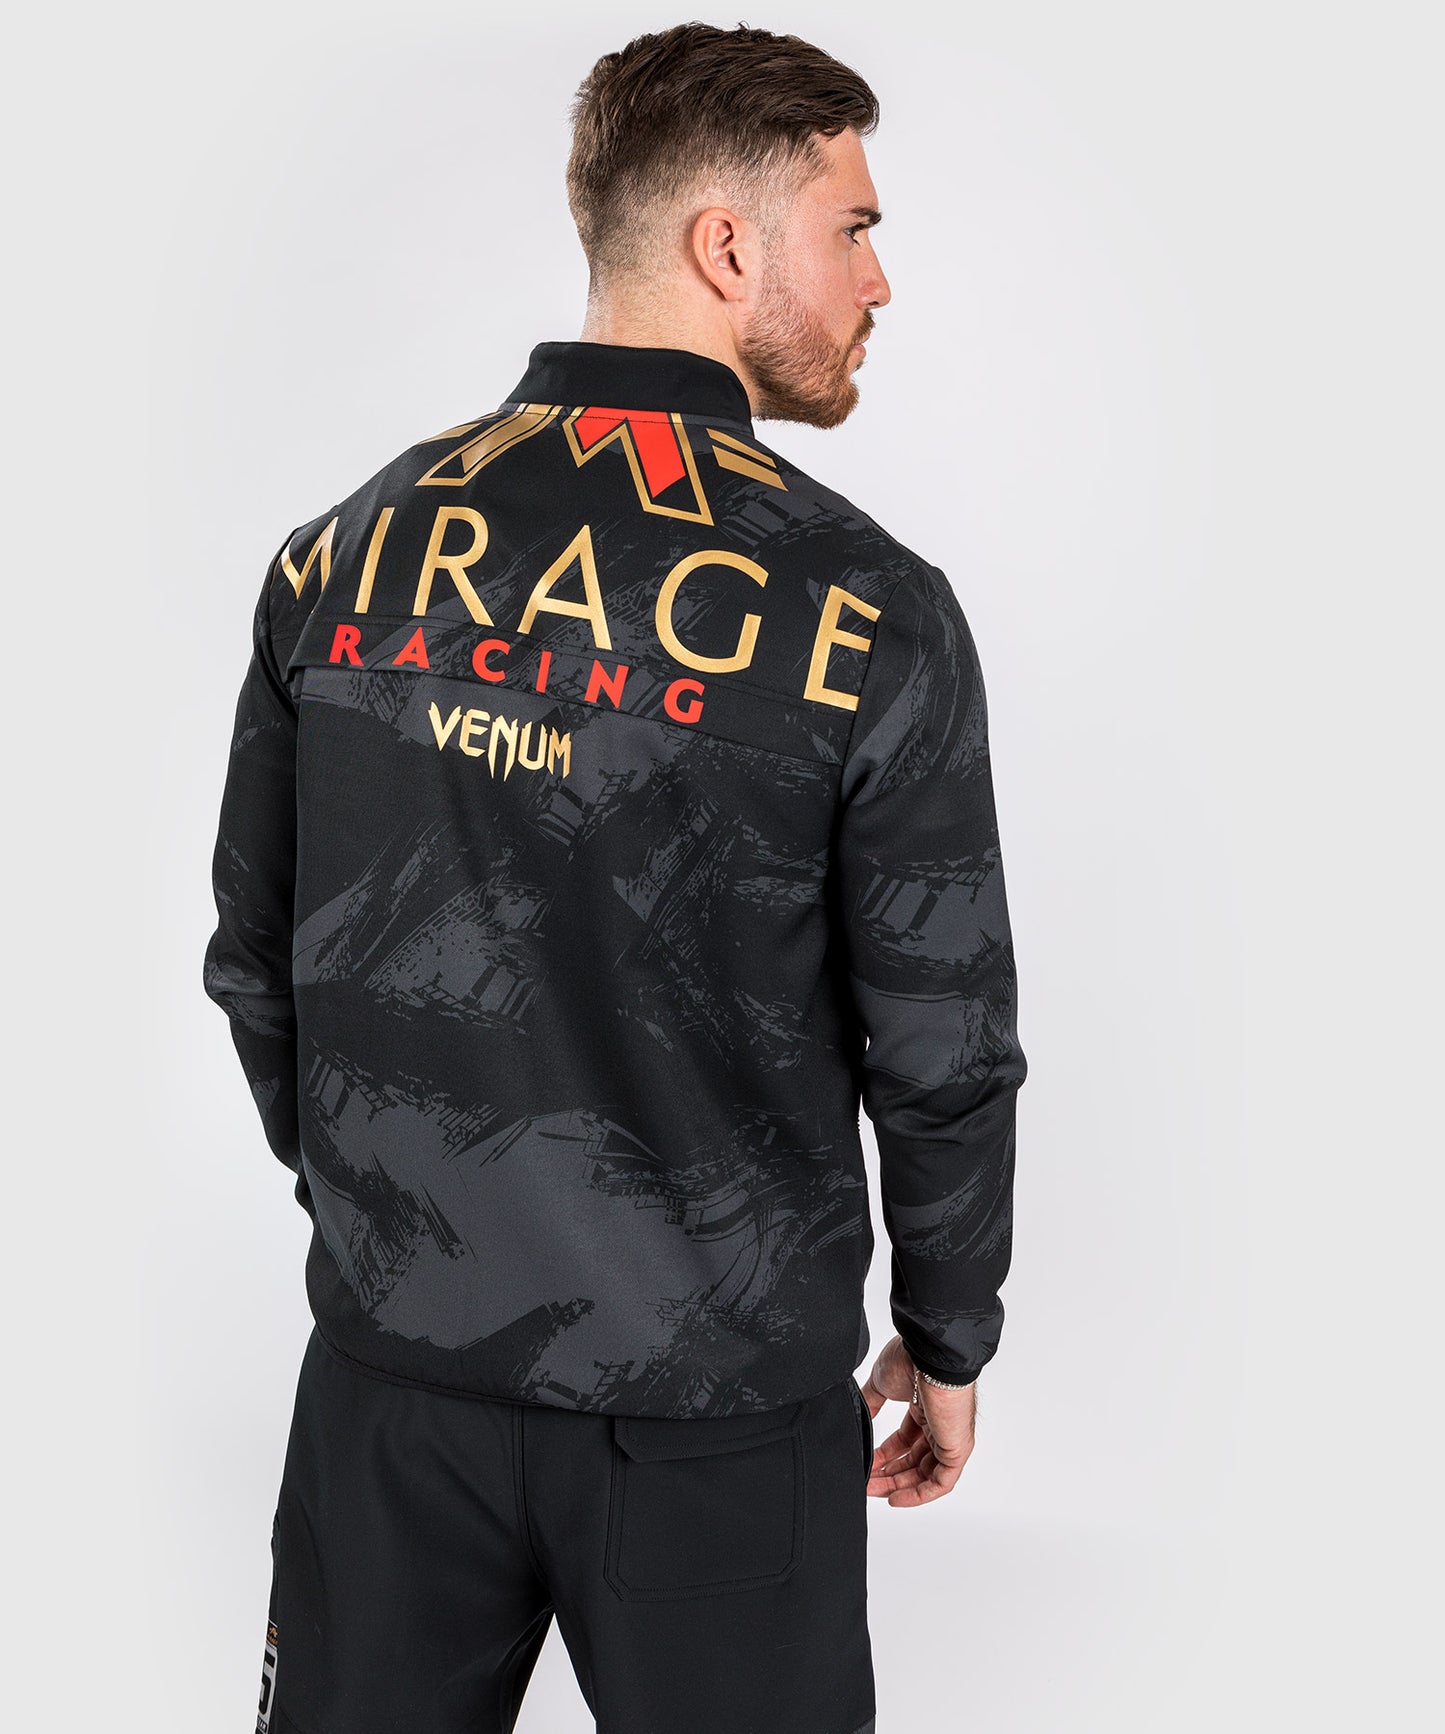 Venum x Mirage Track Jacket - Negro/Oro